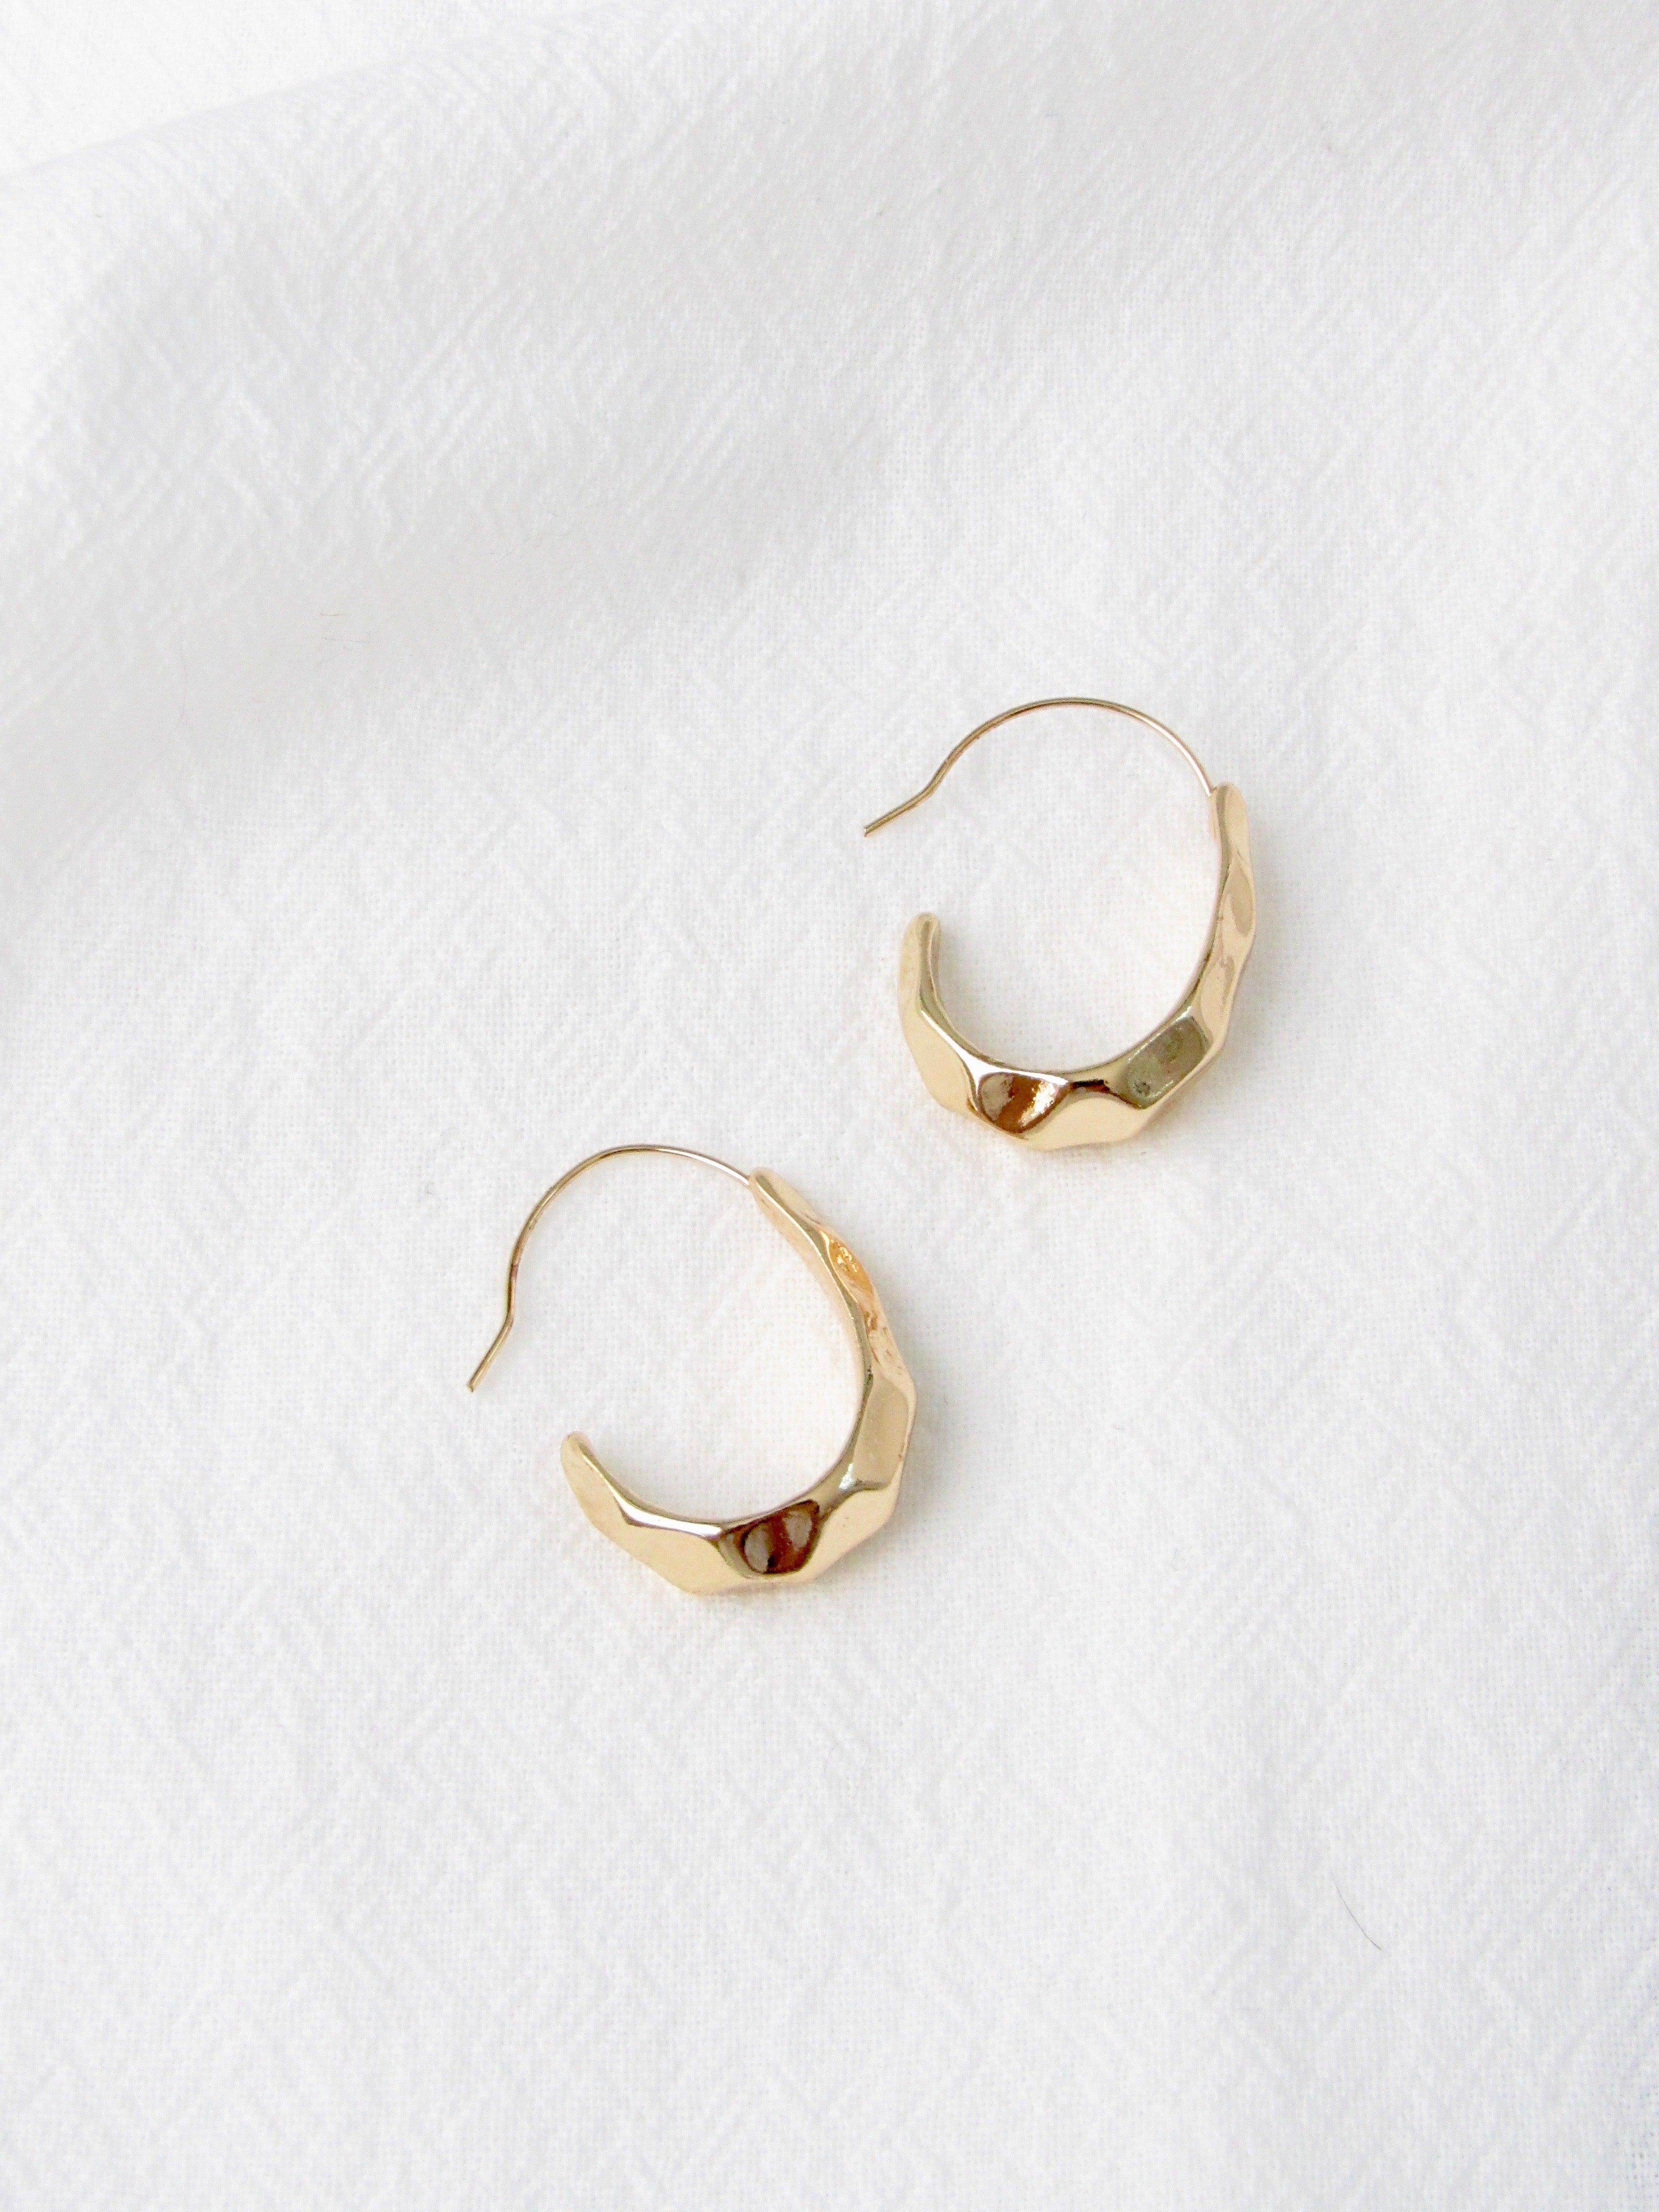 Uneven Texture Gold Dome Hoop Earrings